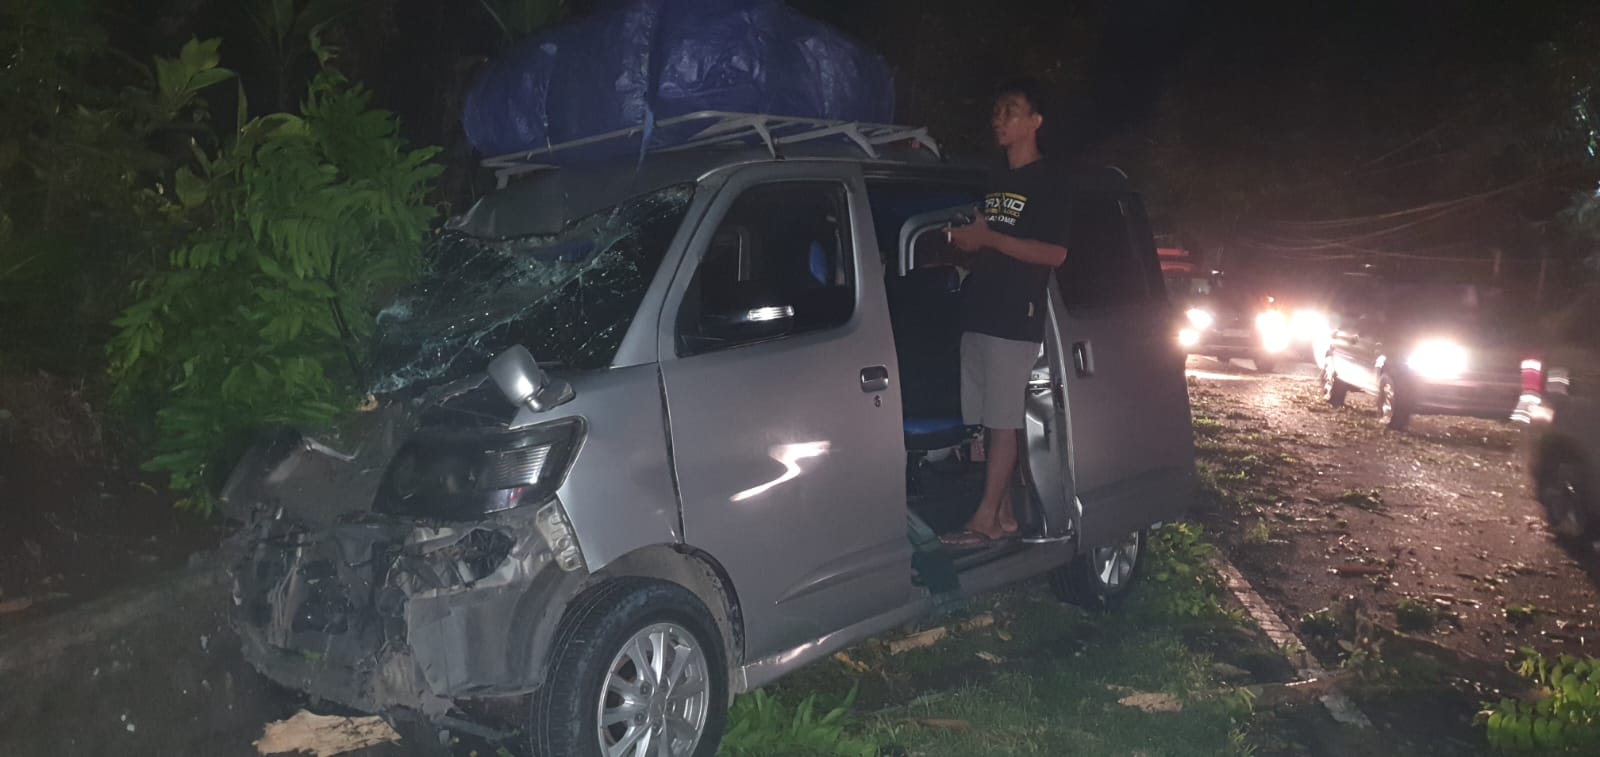 Mobil travel Luxio ringsek tertimpa pohon tumbang di wilayah Karangkamulyan Kabupaten Ciamis Jawa Barat. (istimewa)